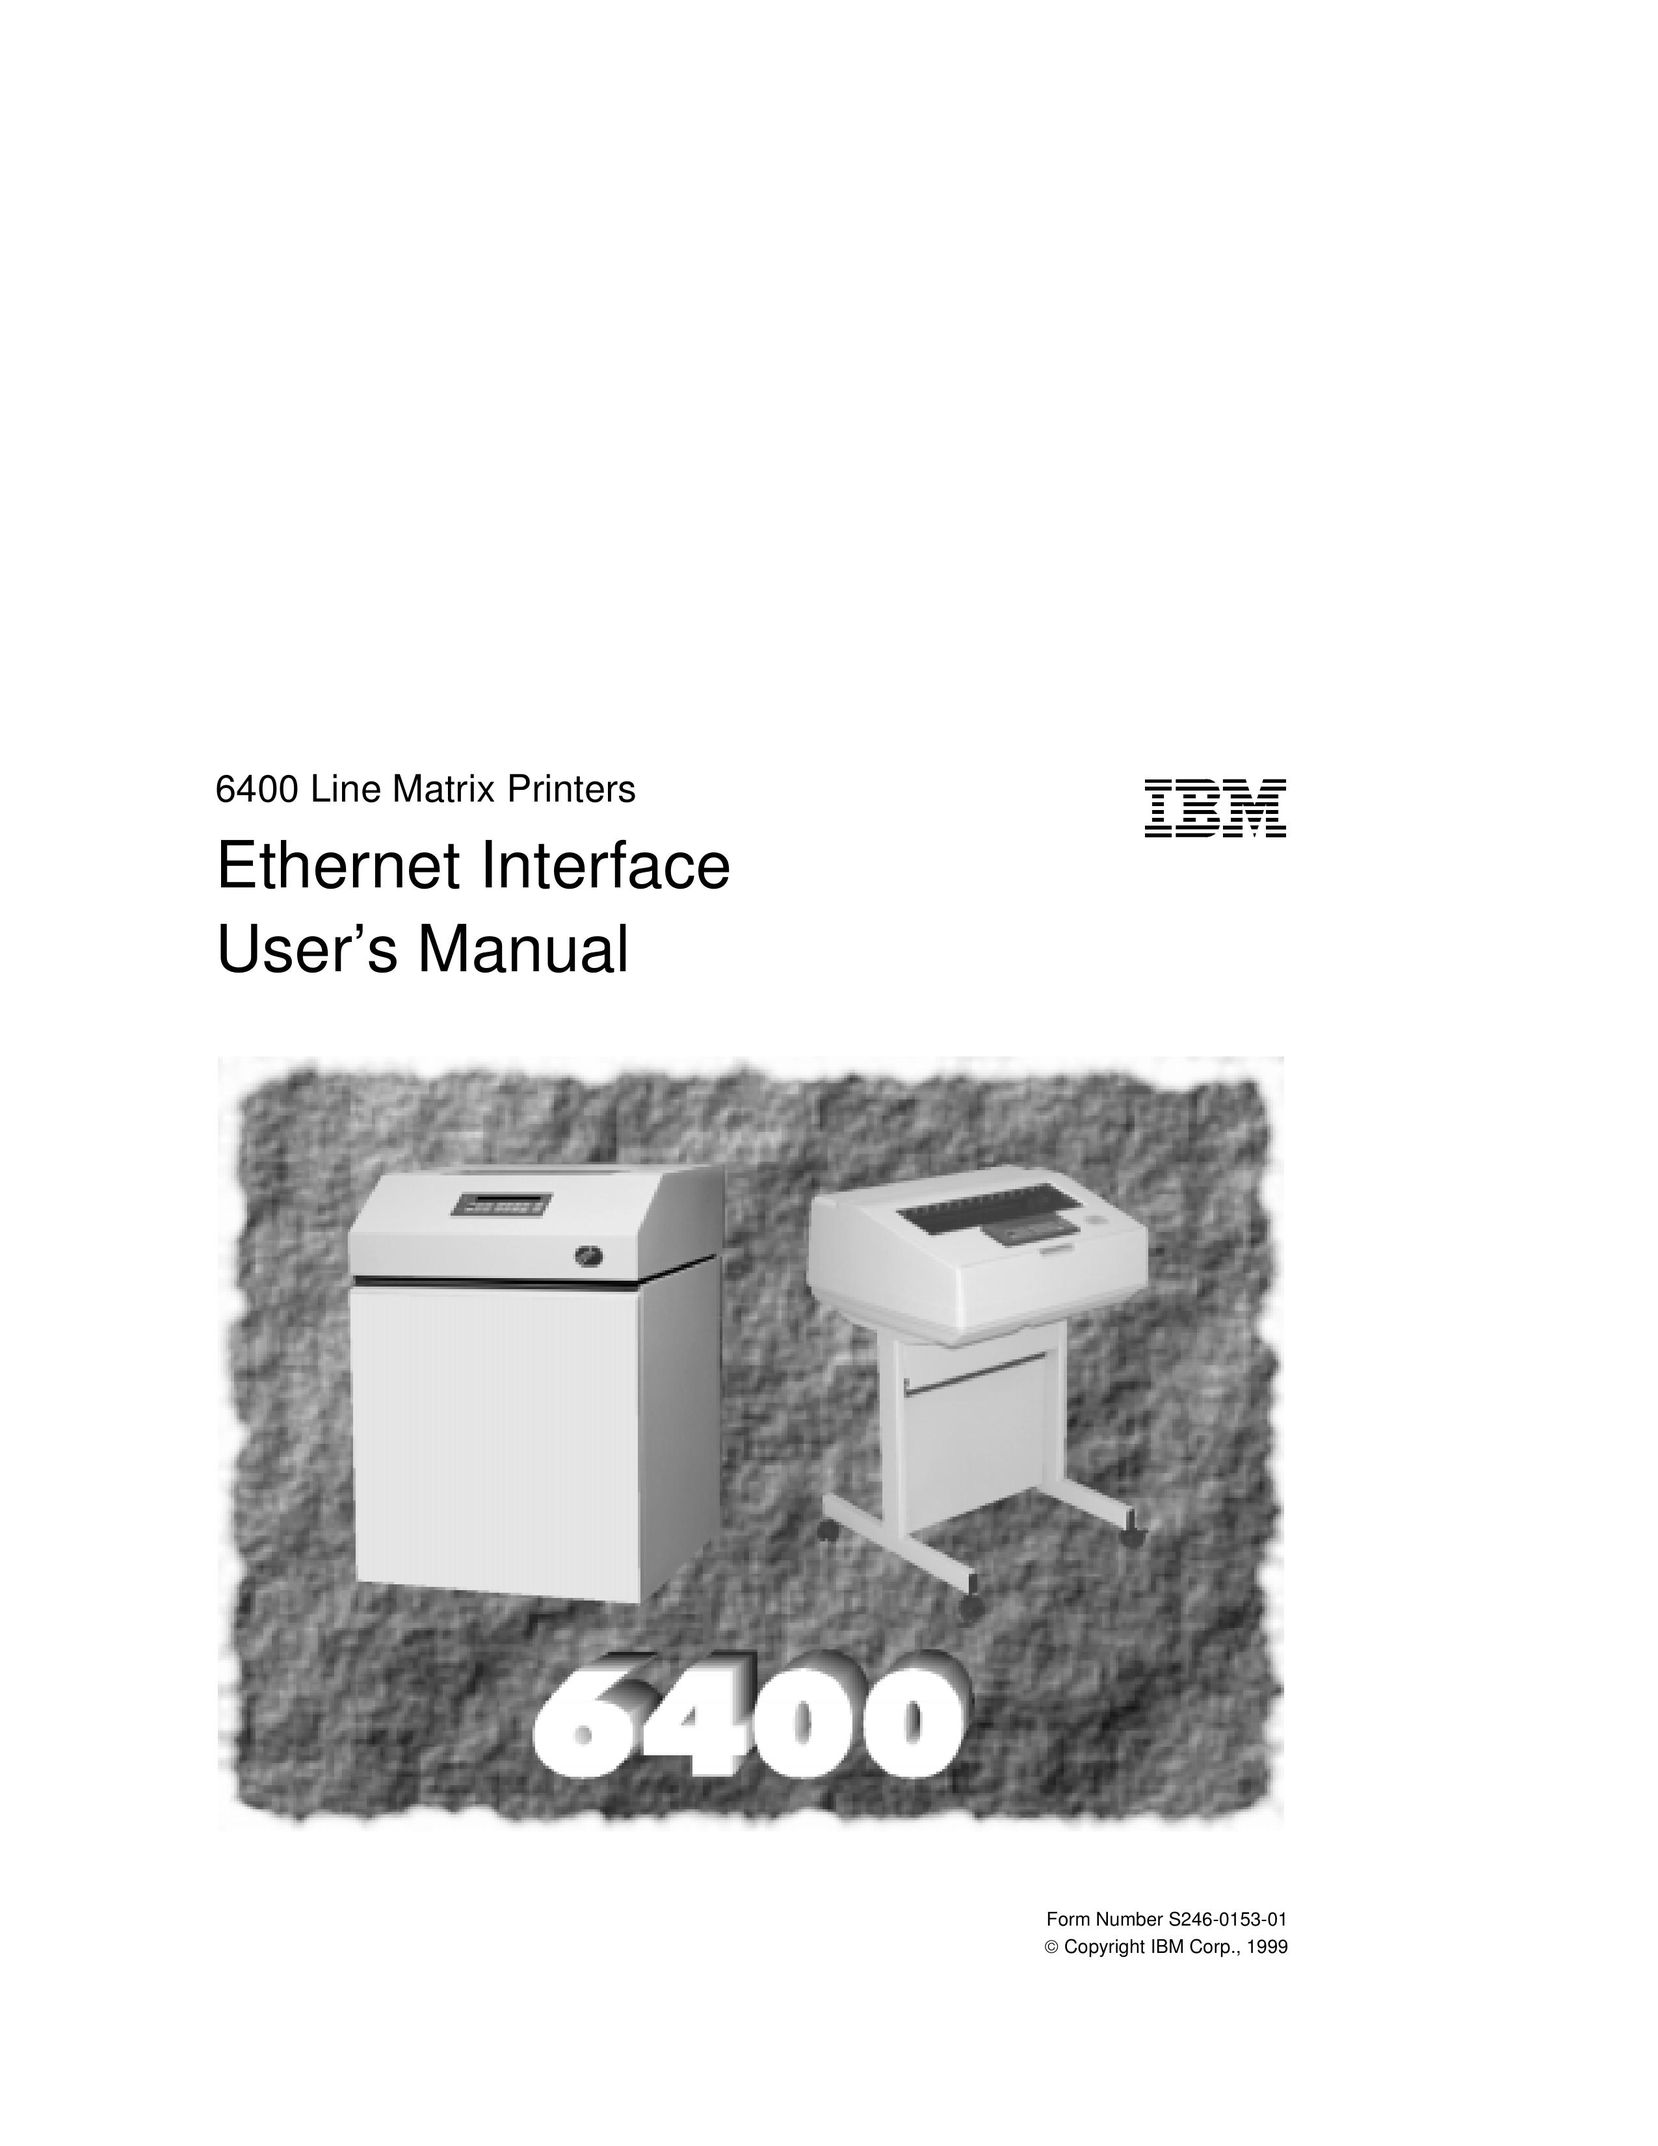 IBM Partner Pavilion 6400 Printer User Manual